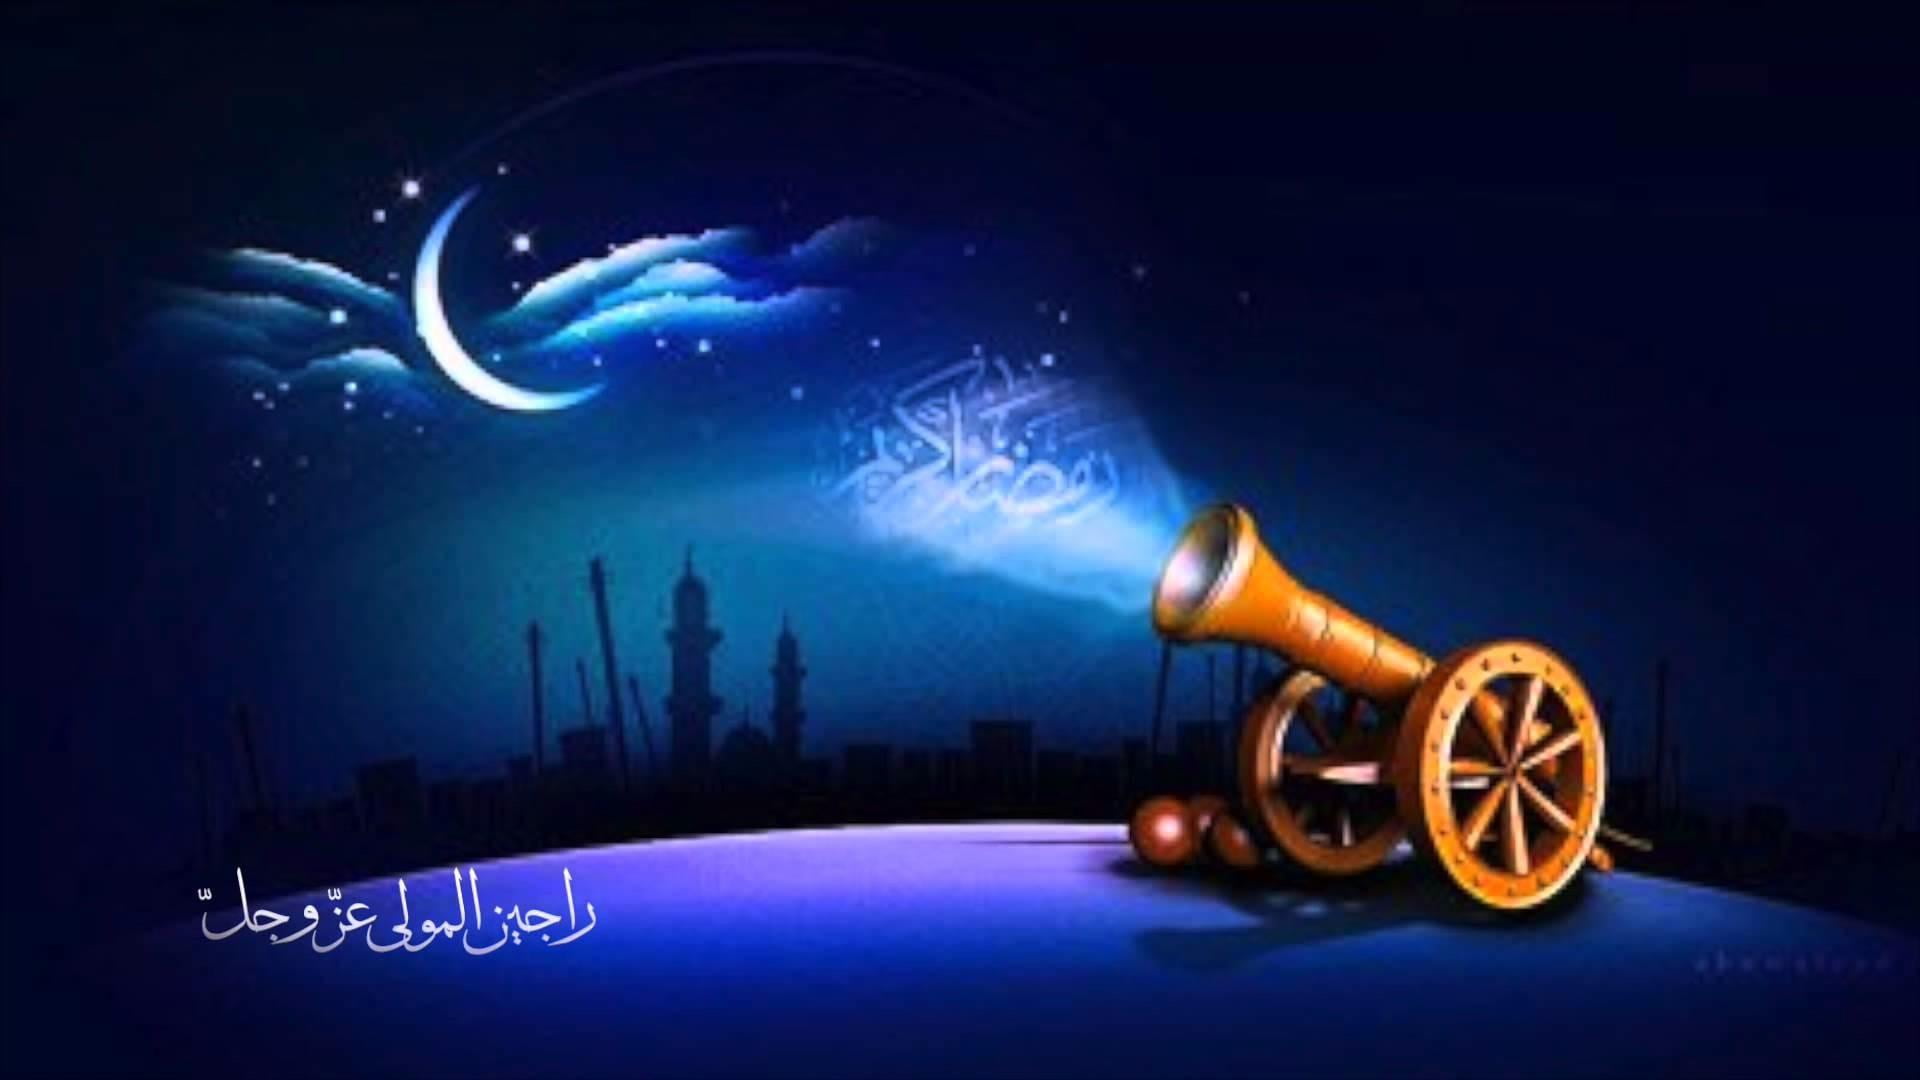 ramadan, night, no people, nature, outdoors, sky, dark, water